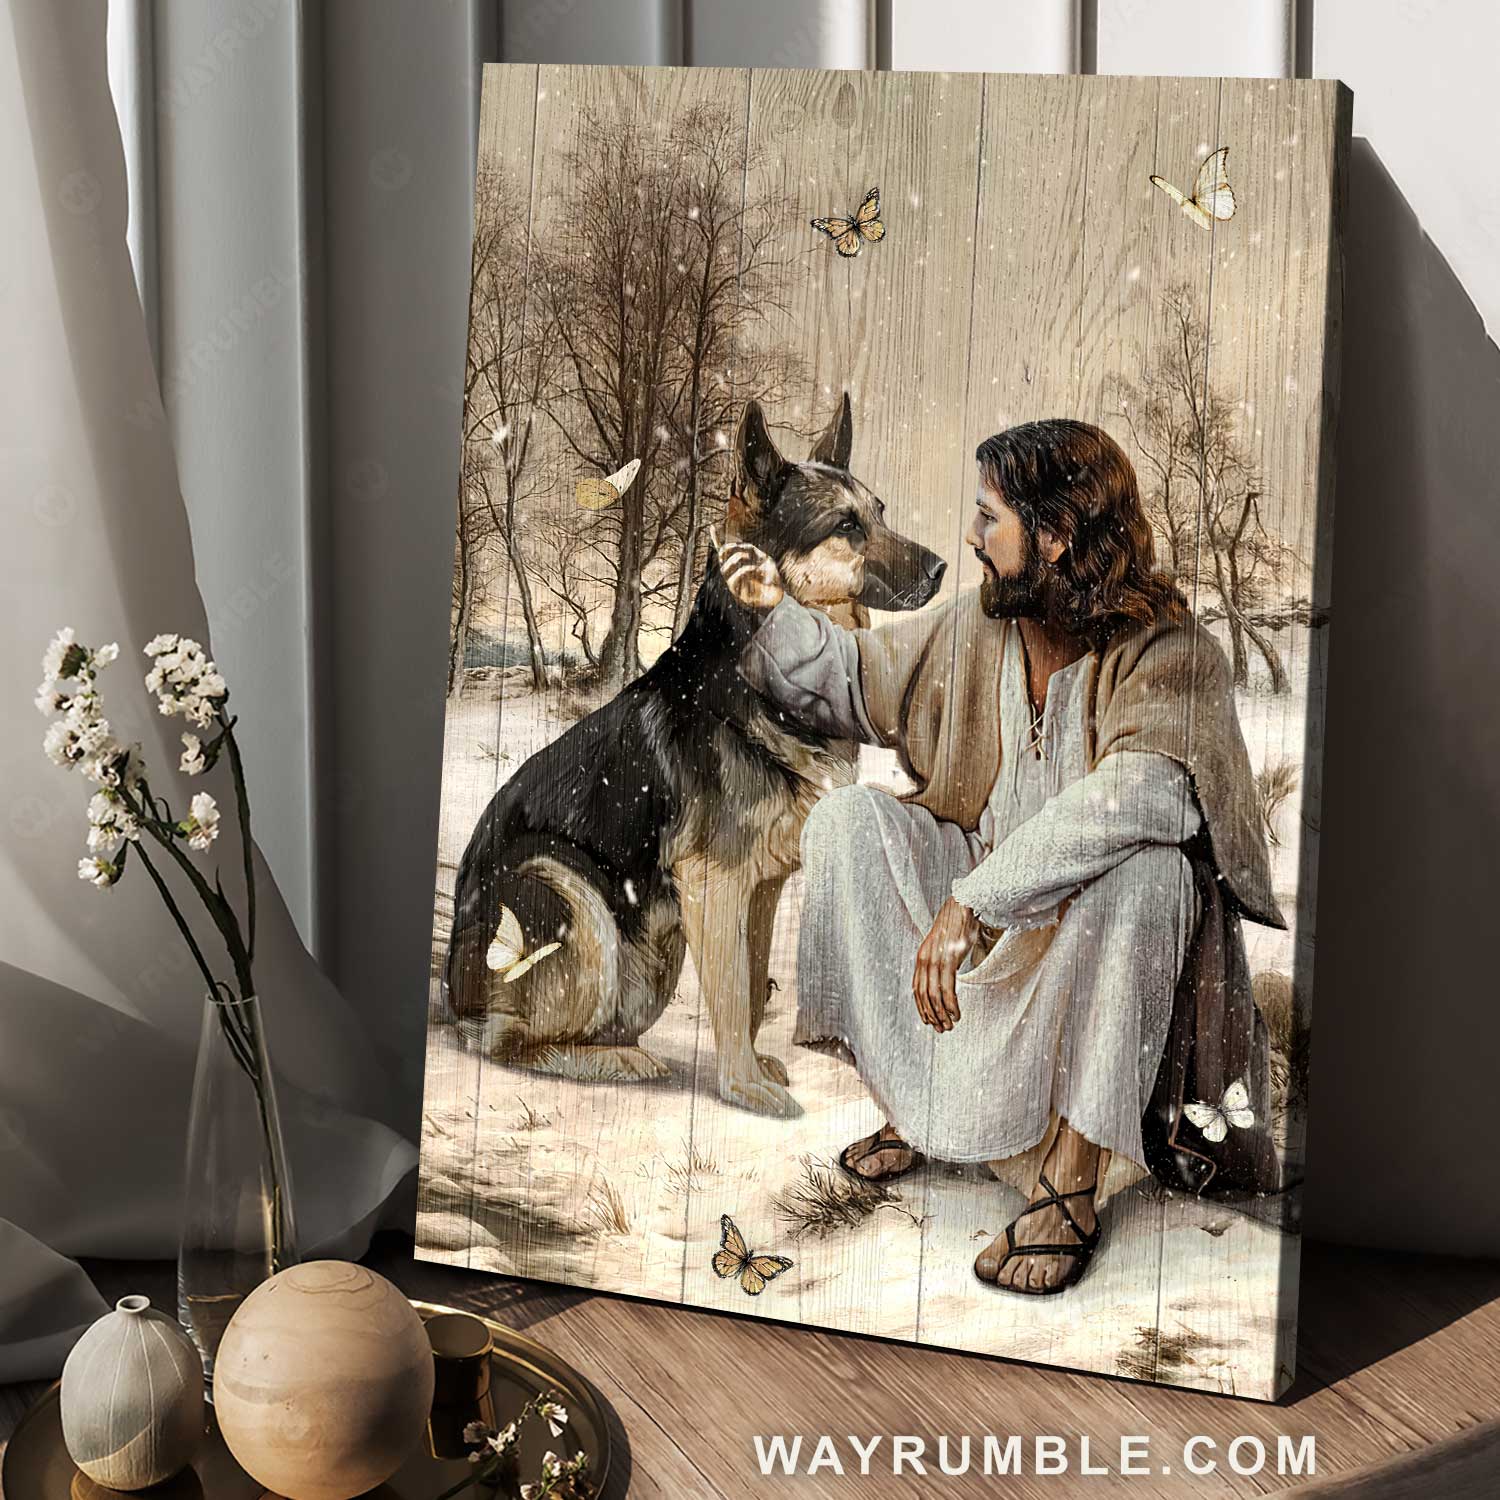 Vintage artwork, Lovely German Shepherd, The passion of Jesus - Jesus Portrait Canvas Prints, Home Decor Wall Art